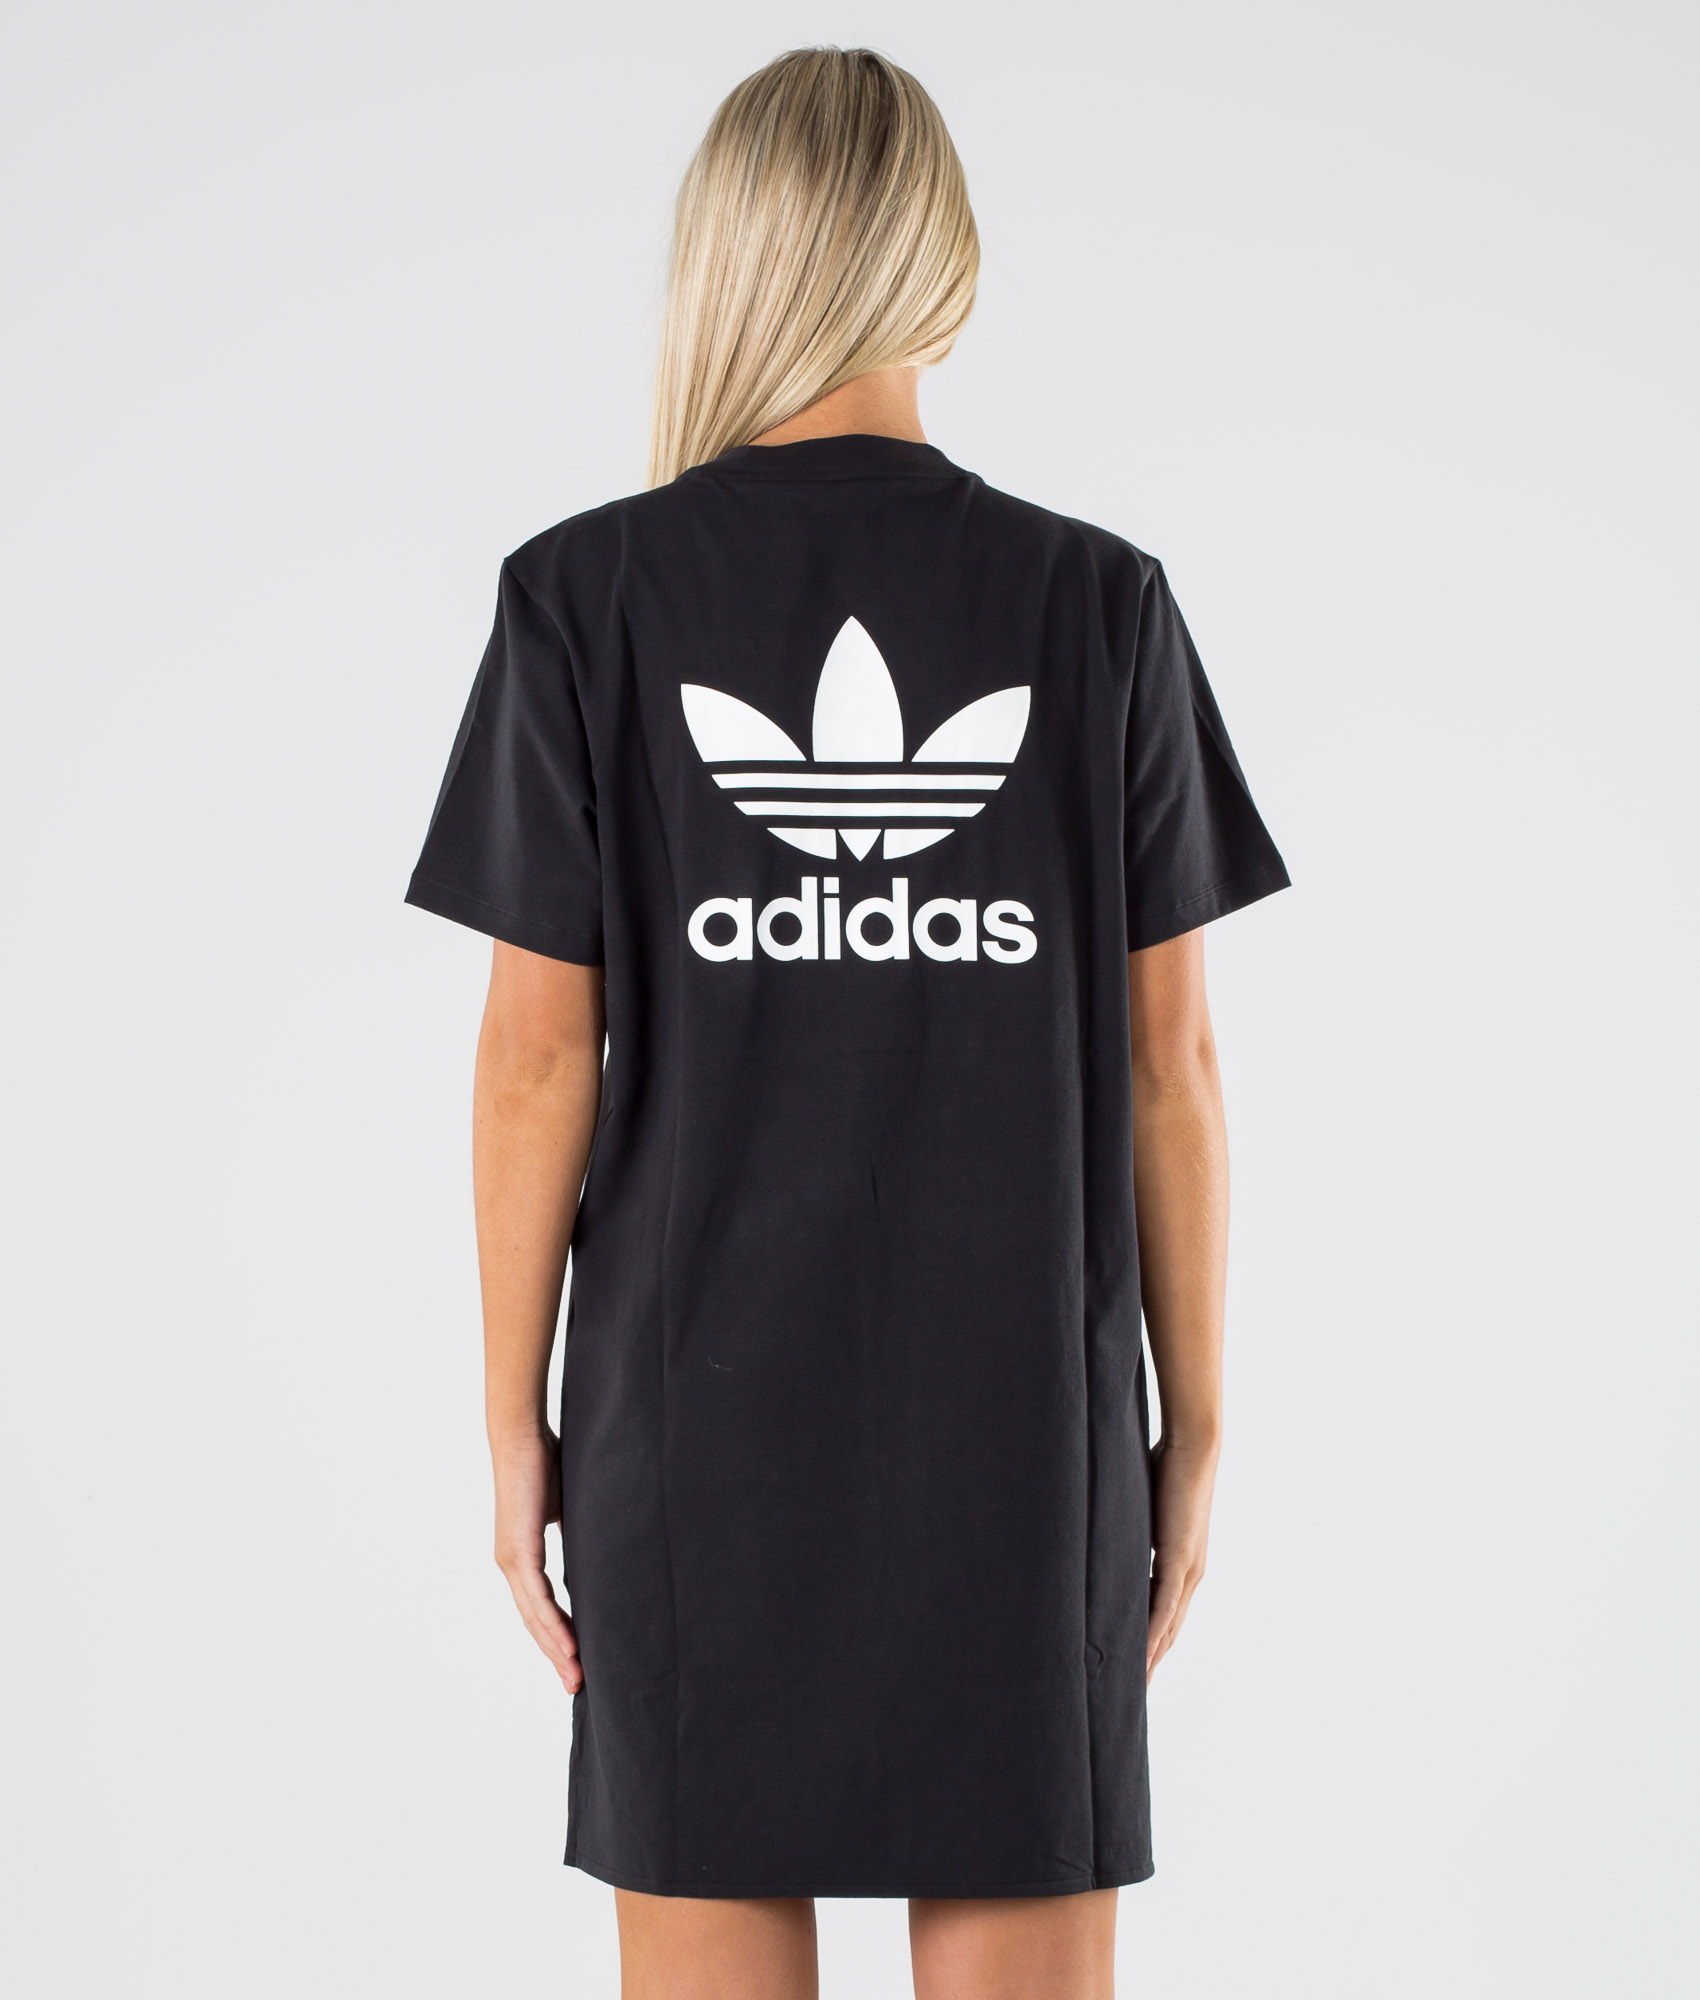 Adidas Originals Trefoil Dress Dress 